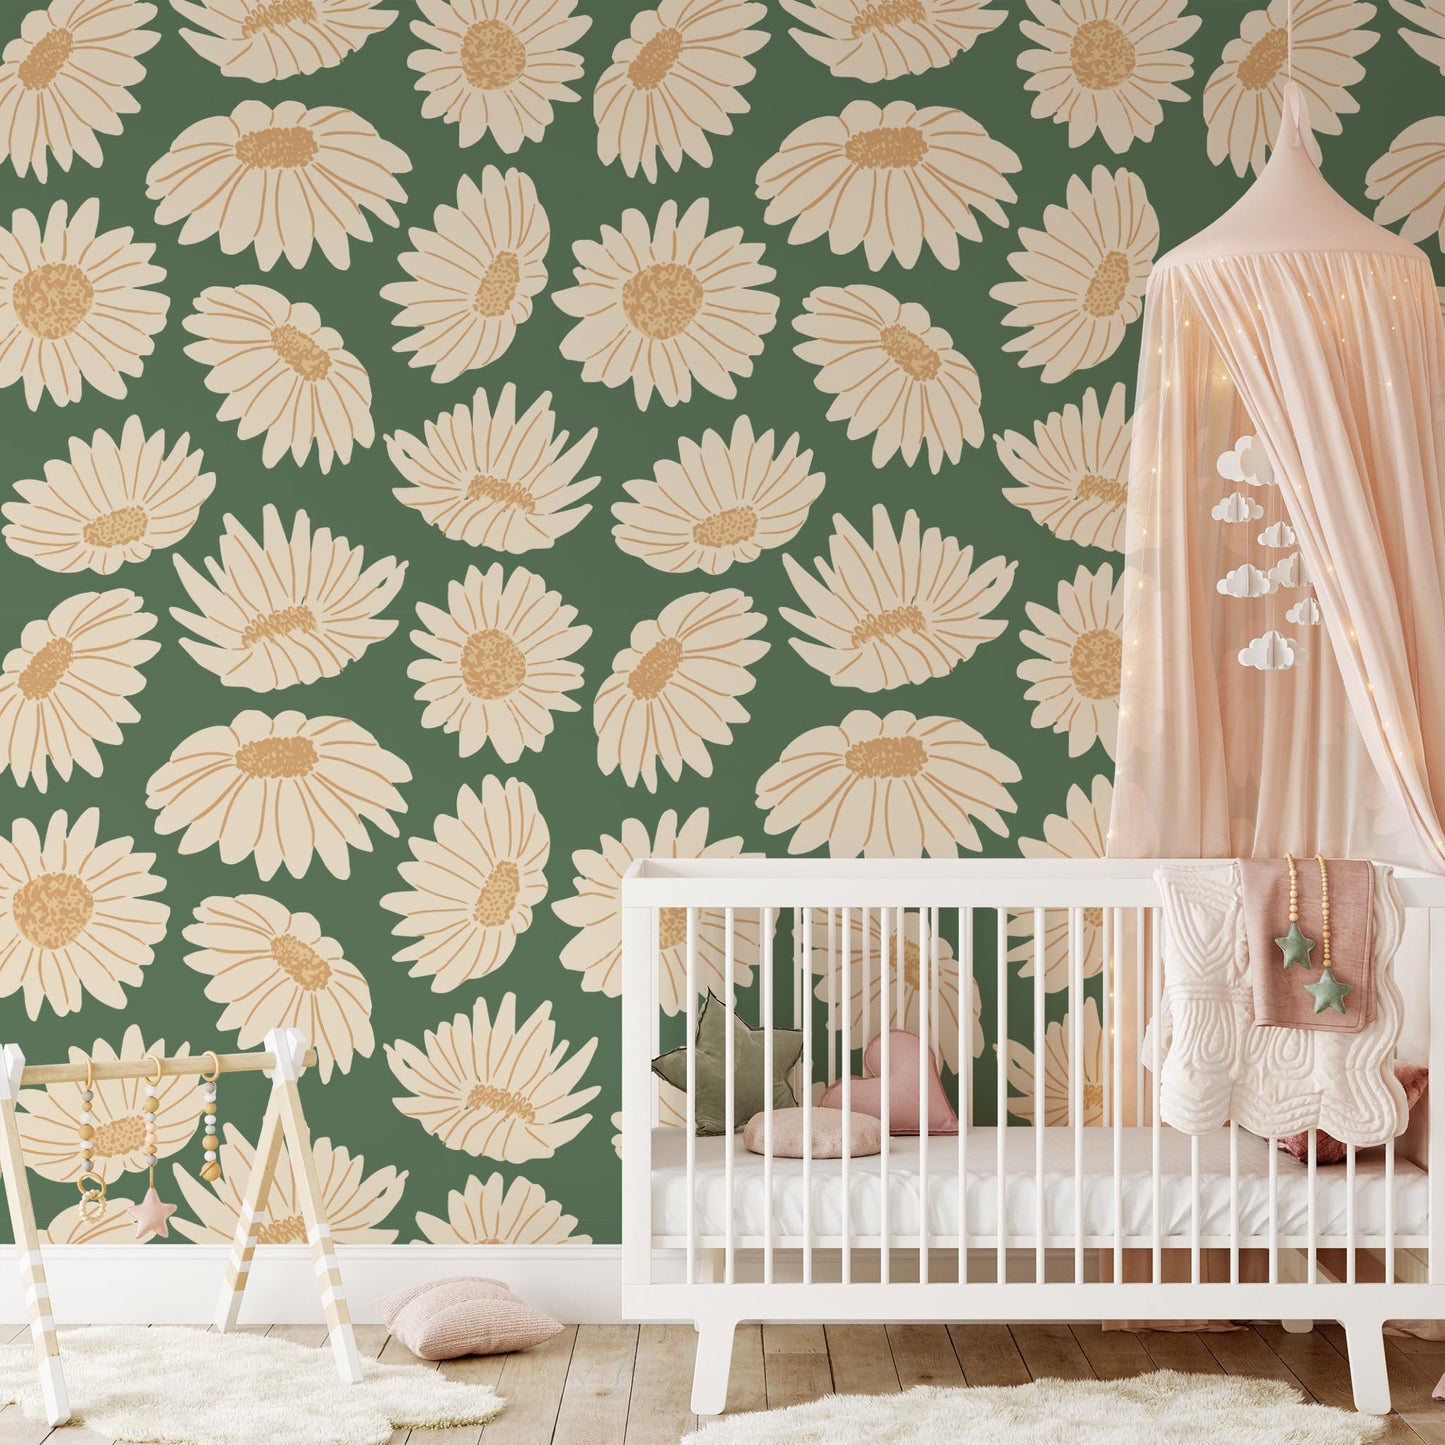 Nursery room preview of Daisies Wallpaper in Green by artist Brenda Bird